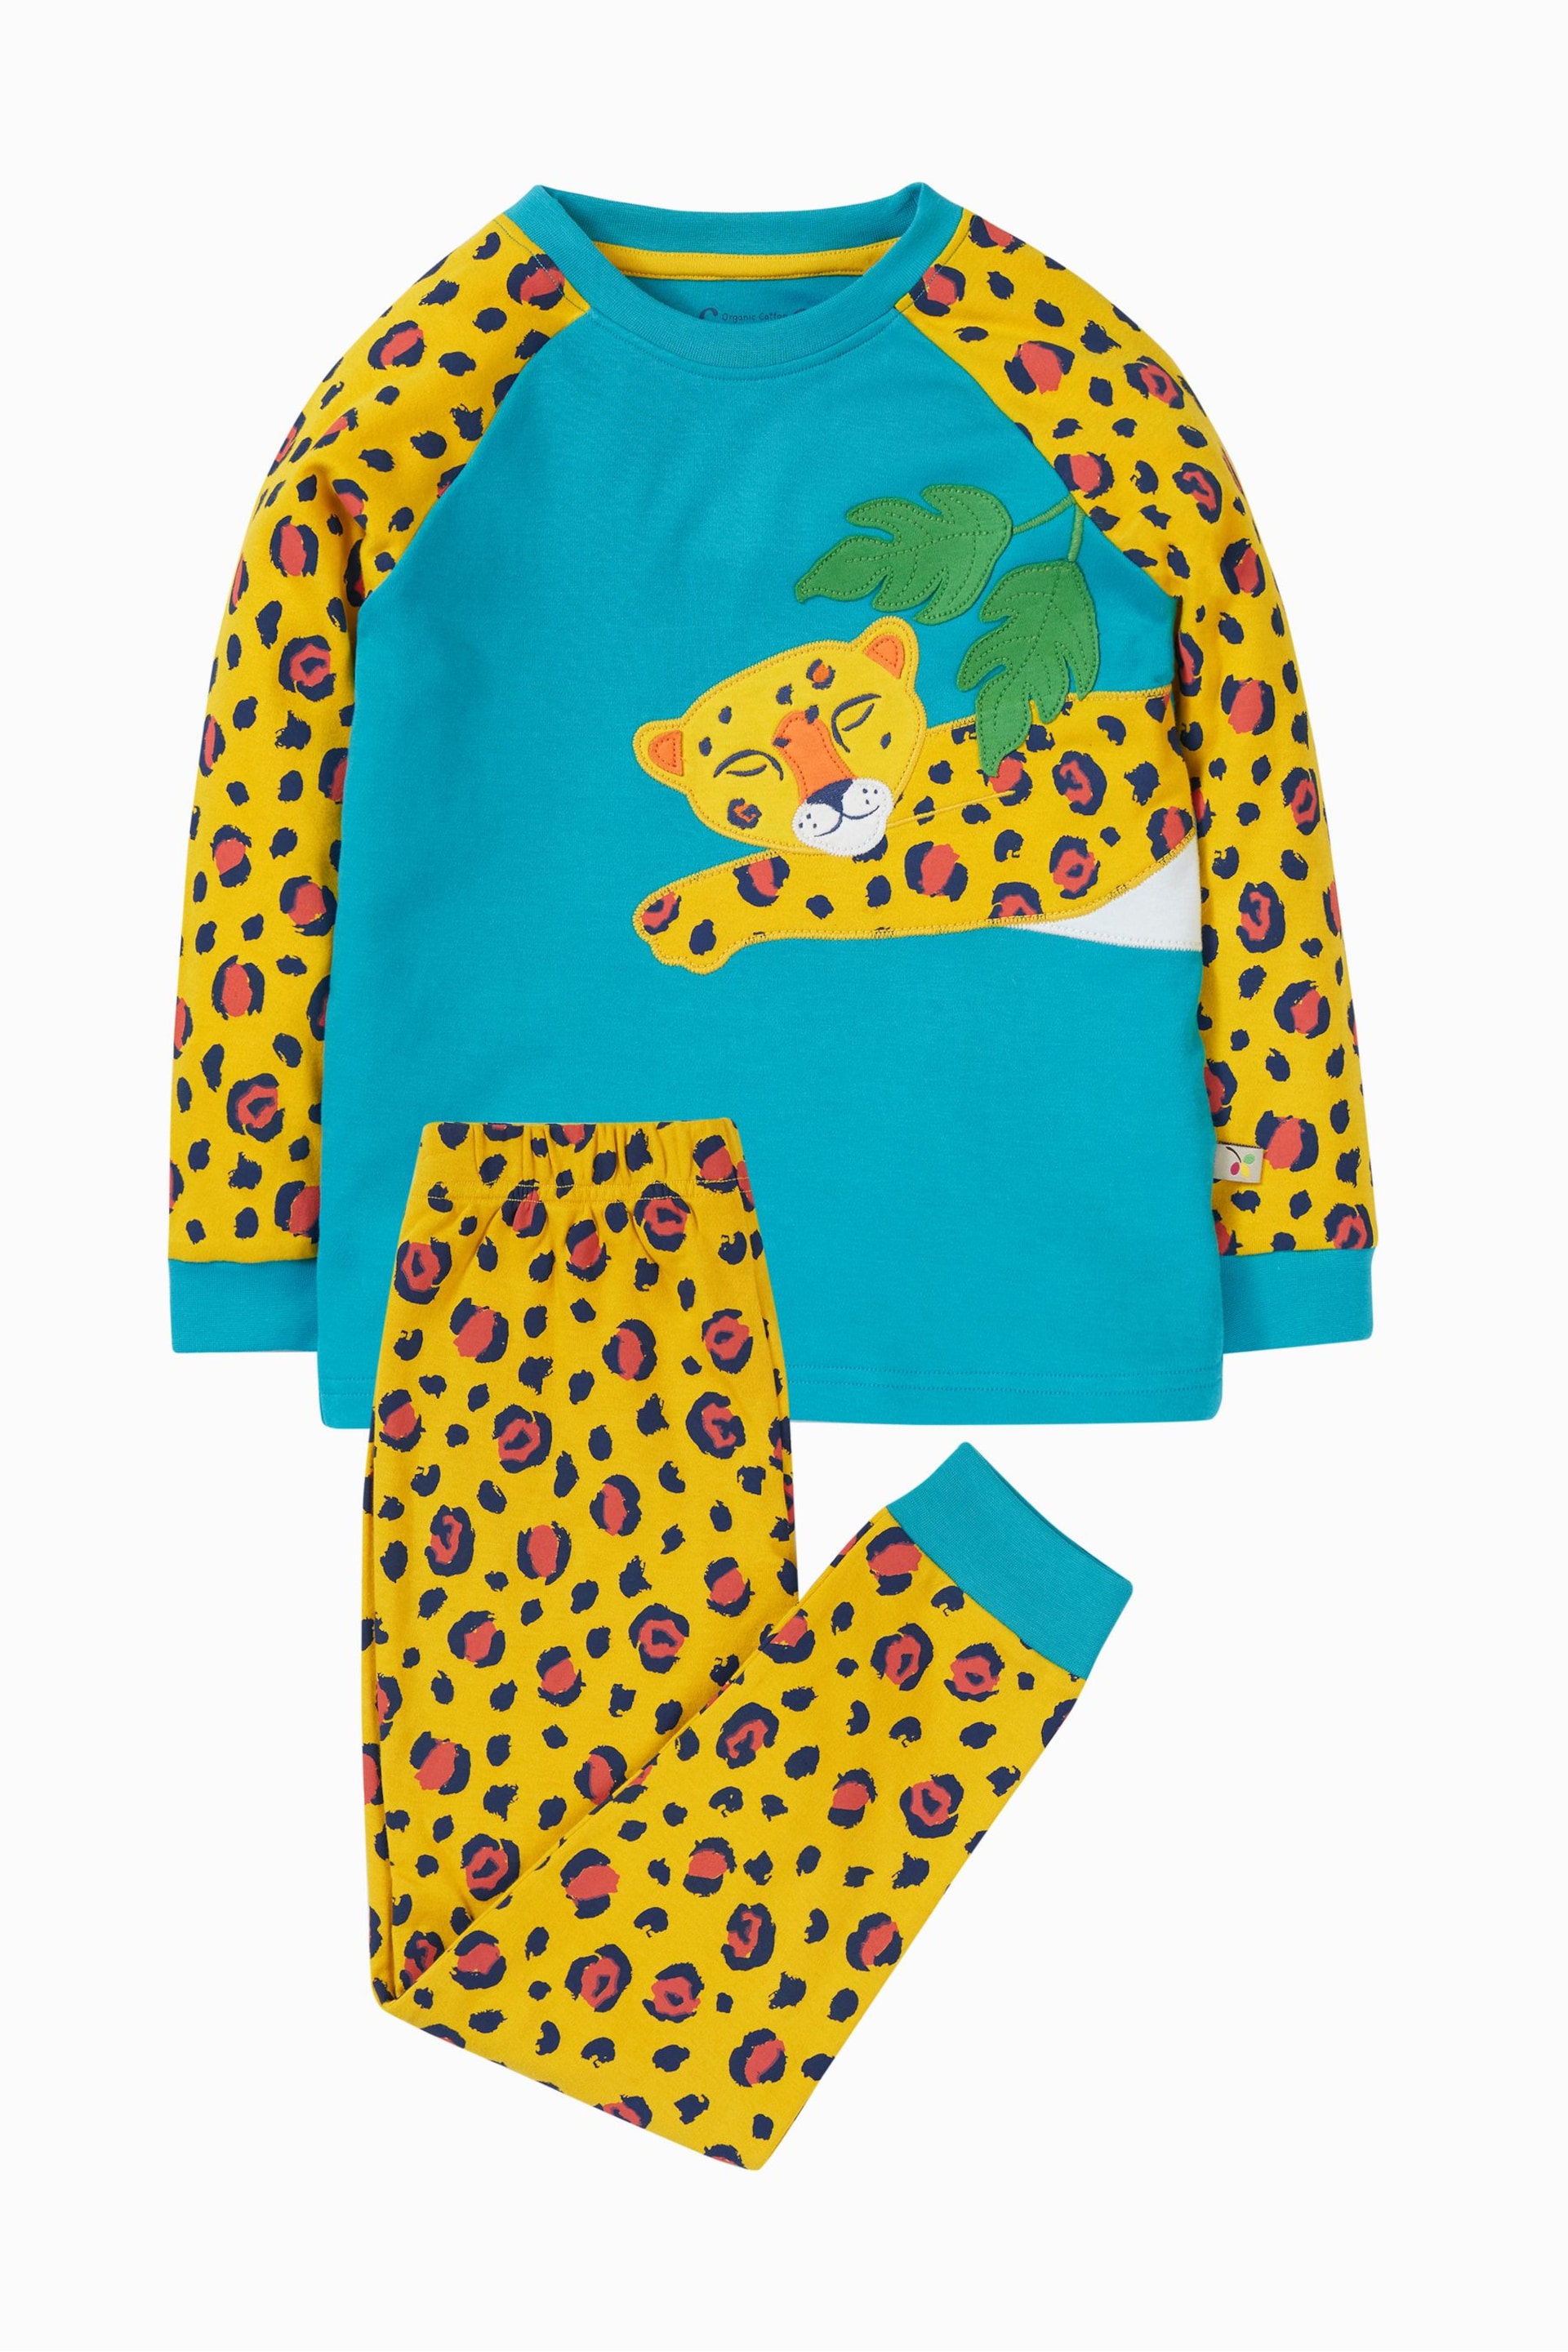 Frugi Yellow Raglan Pyjama Set With Character Applique - Image 1 of 3